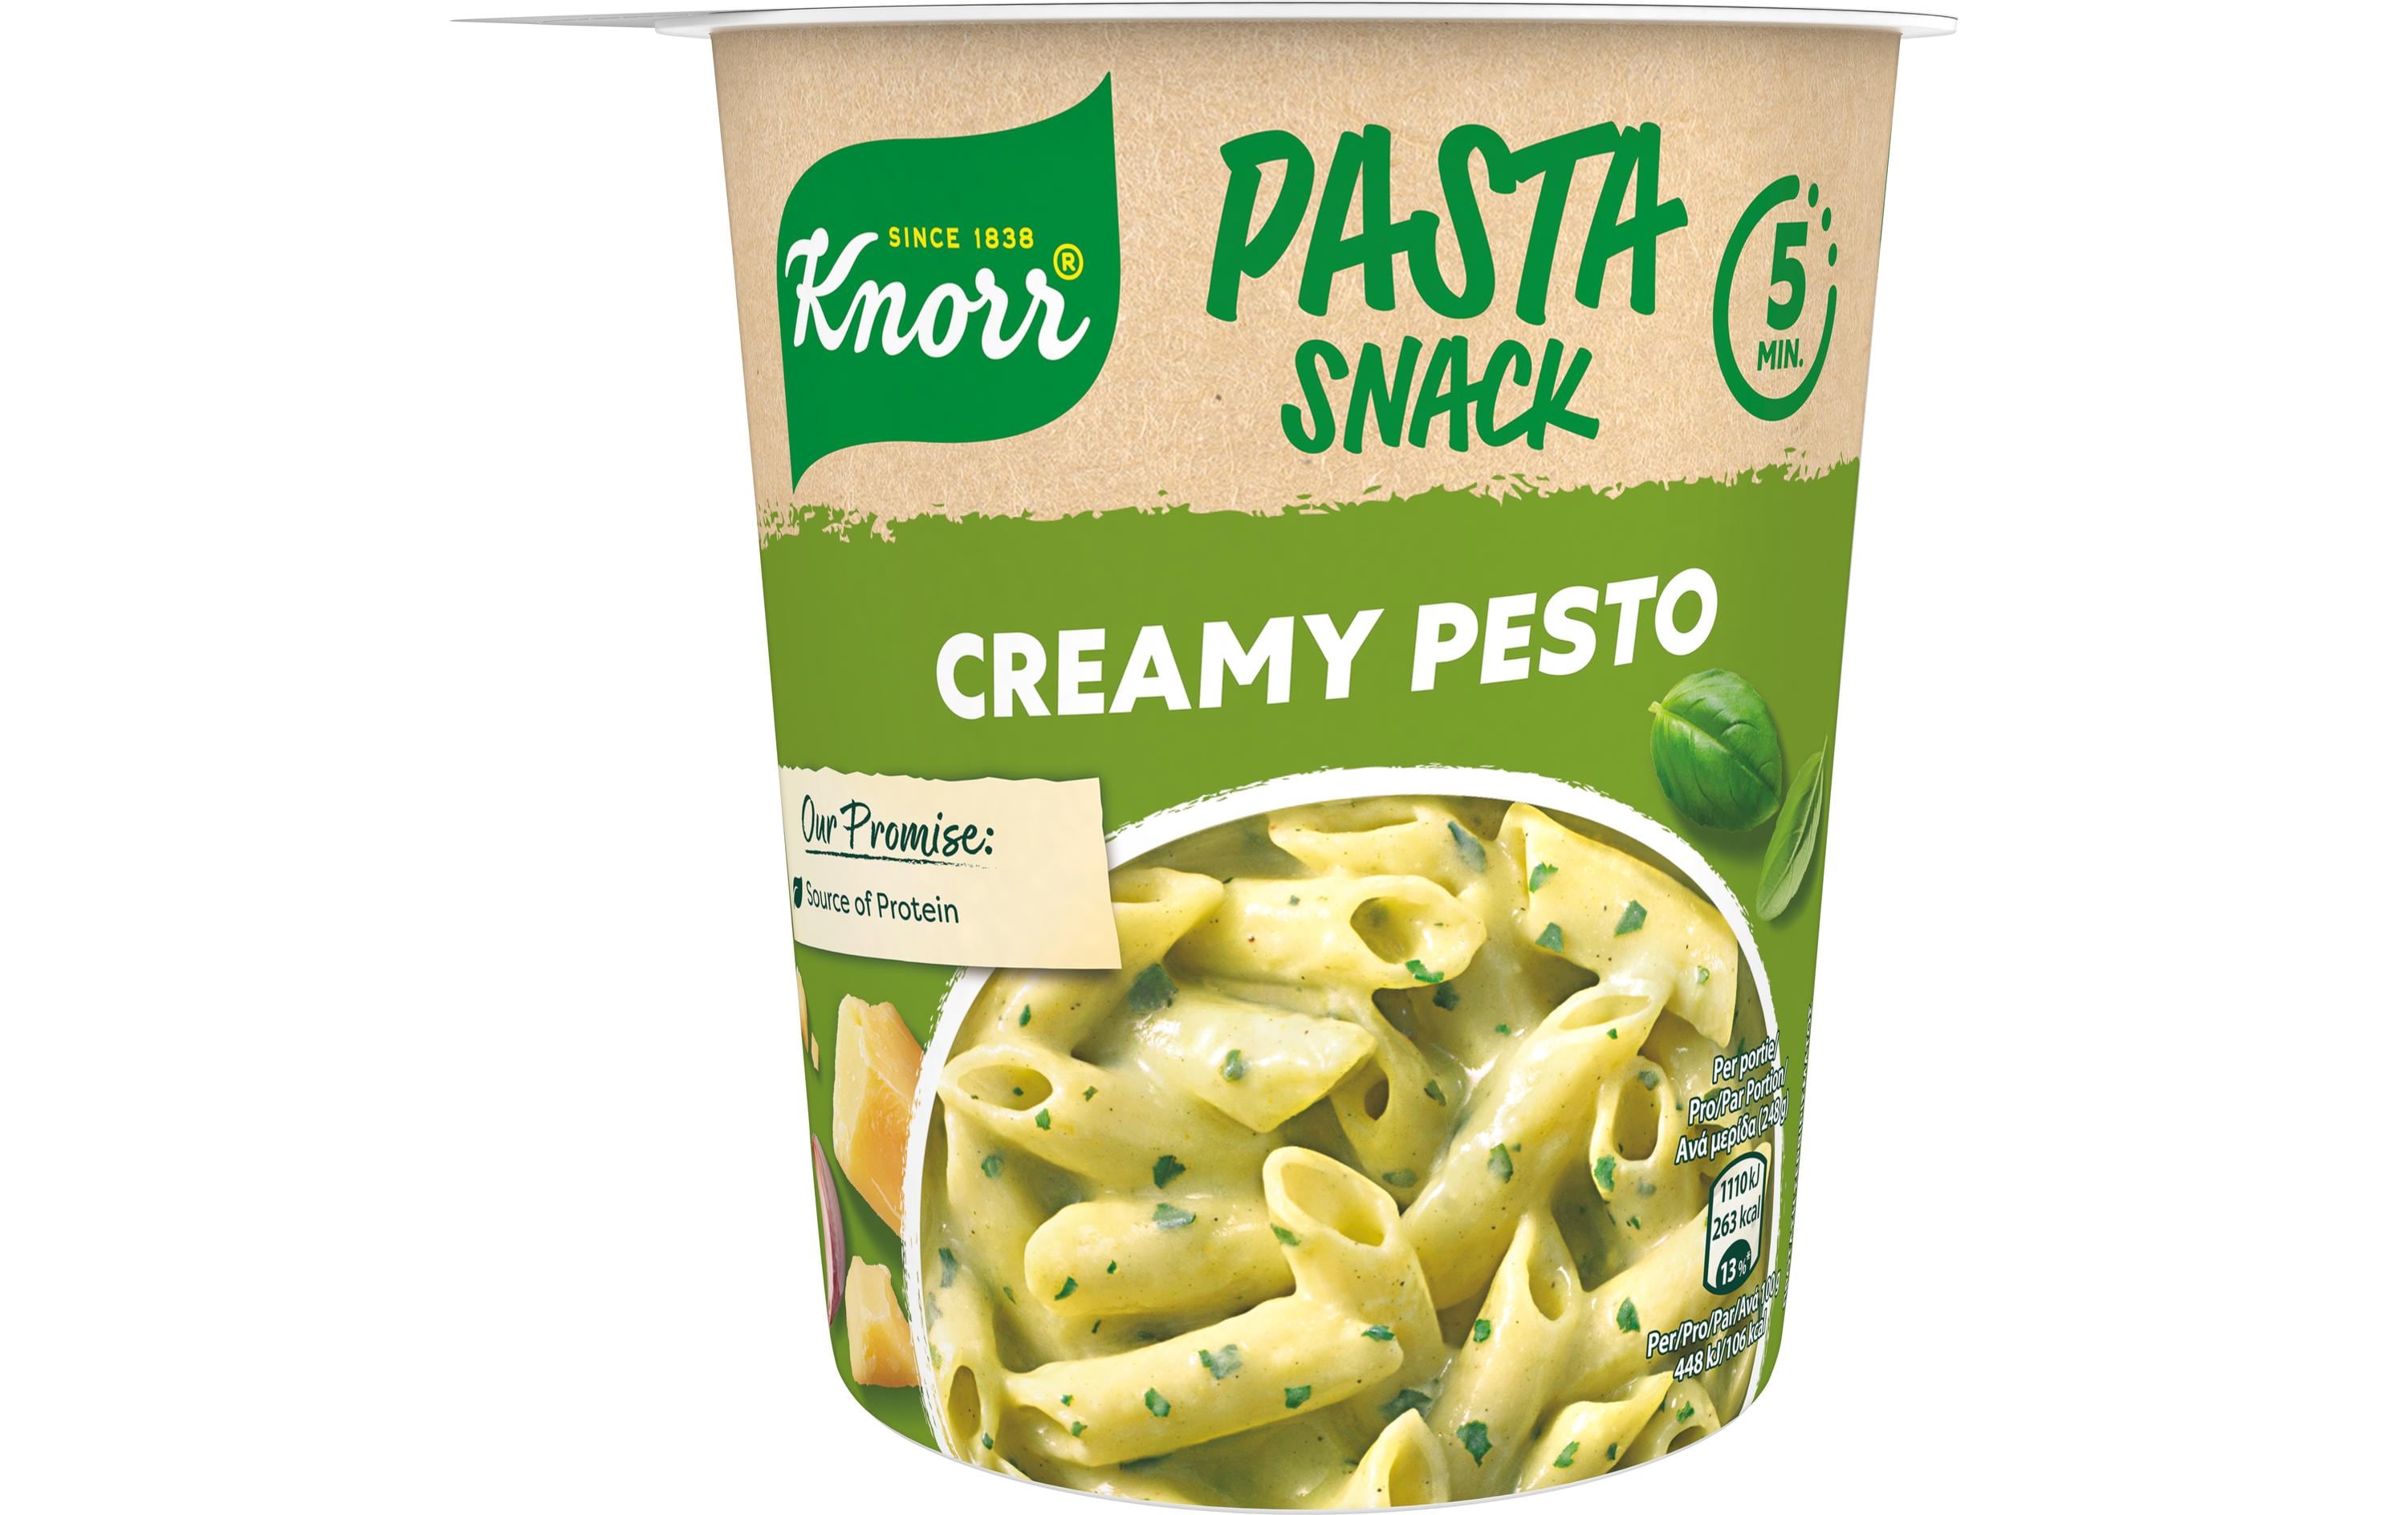 Knorr Fertiggericht Pasta Snack Creamy Pesto 68 g